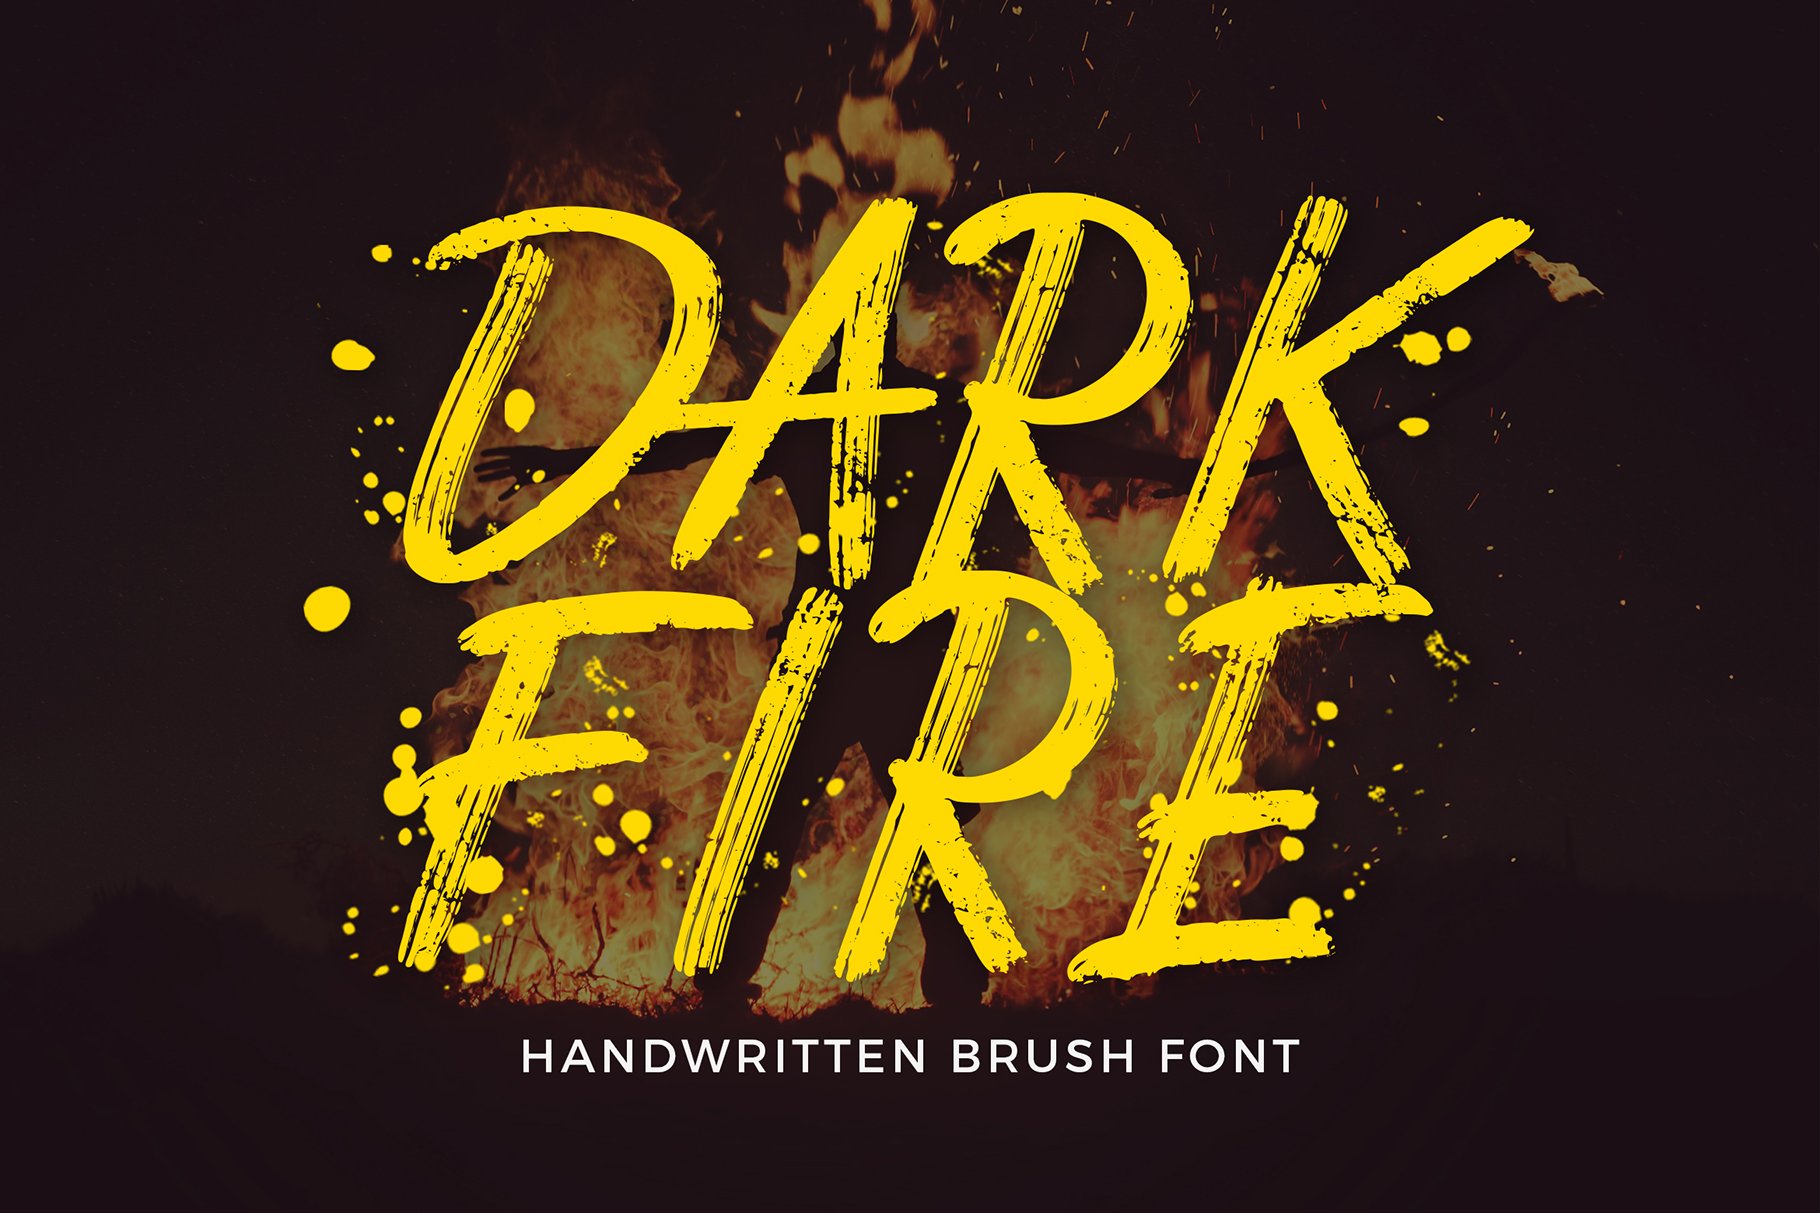 Dark Fire Brush Font cover image.